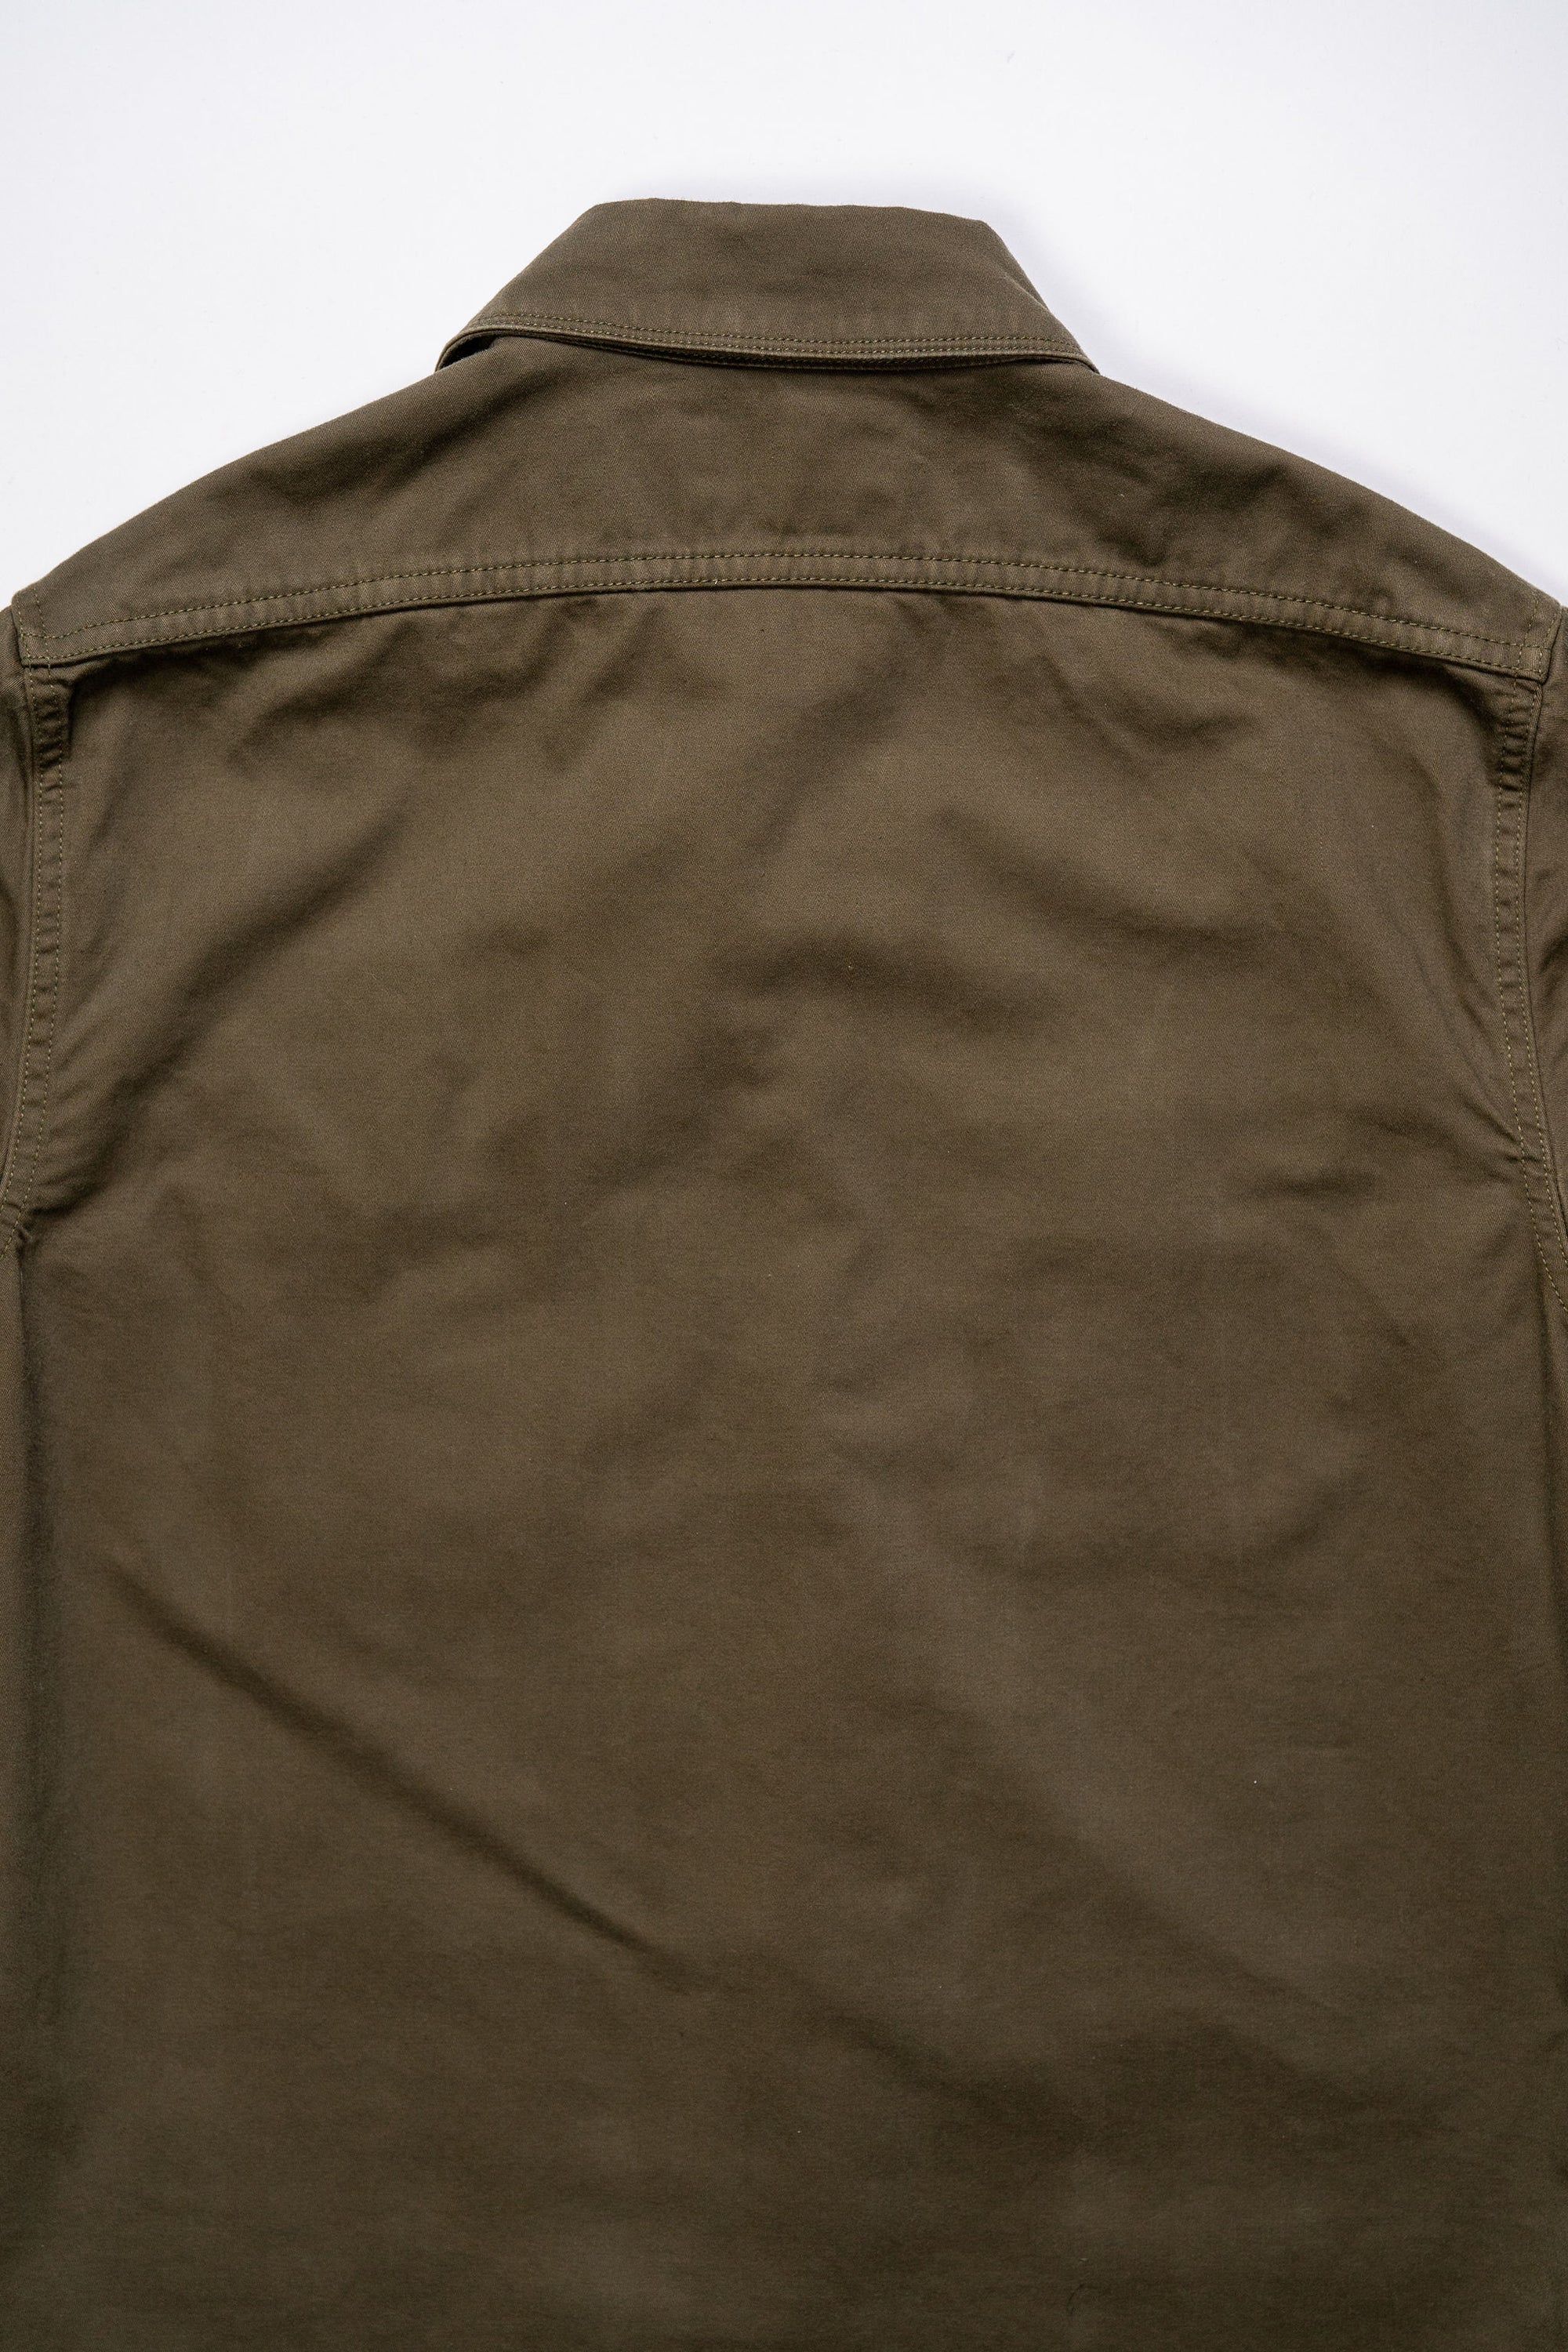 Freenote Cloth Rancho - Army Green